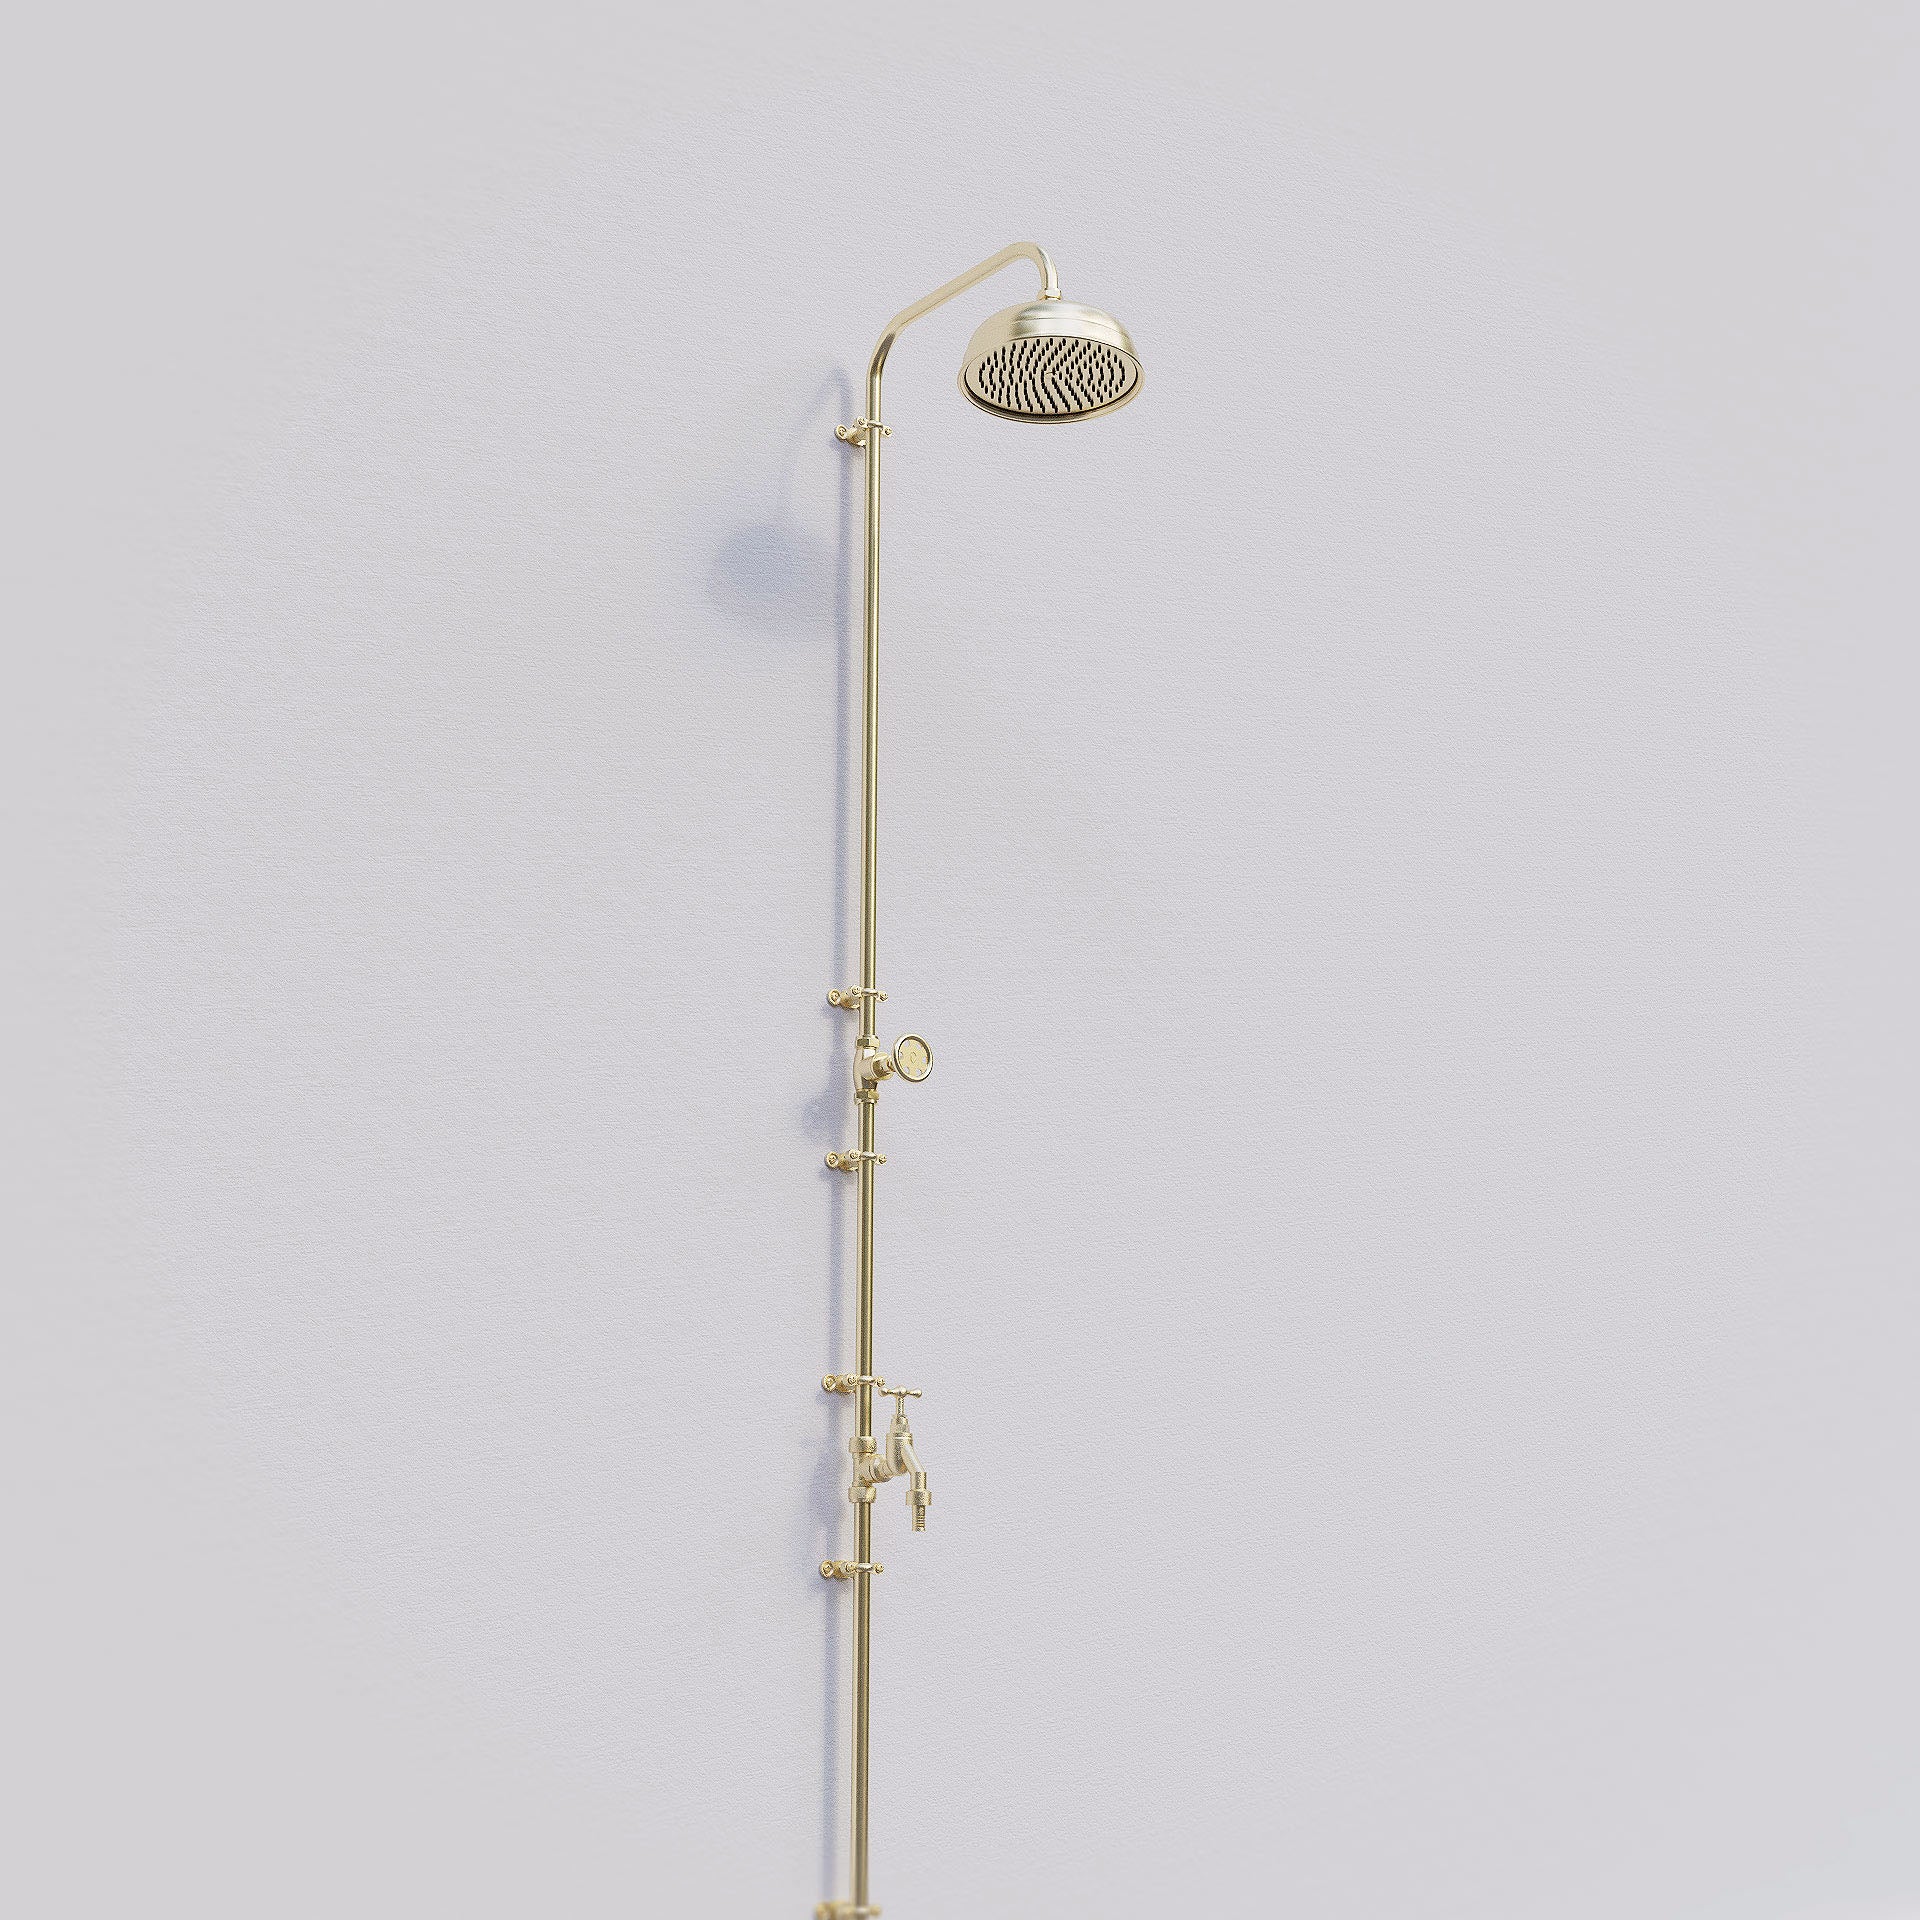 Brass single inlet outdoor shower